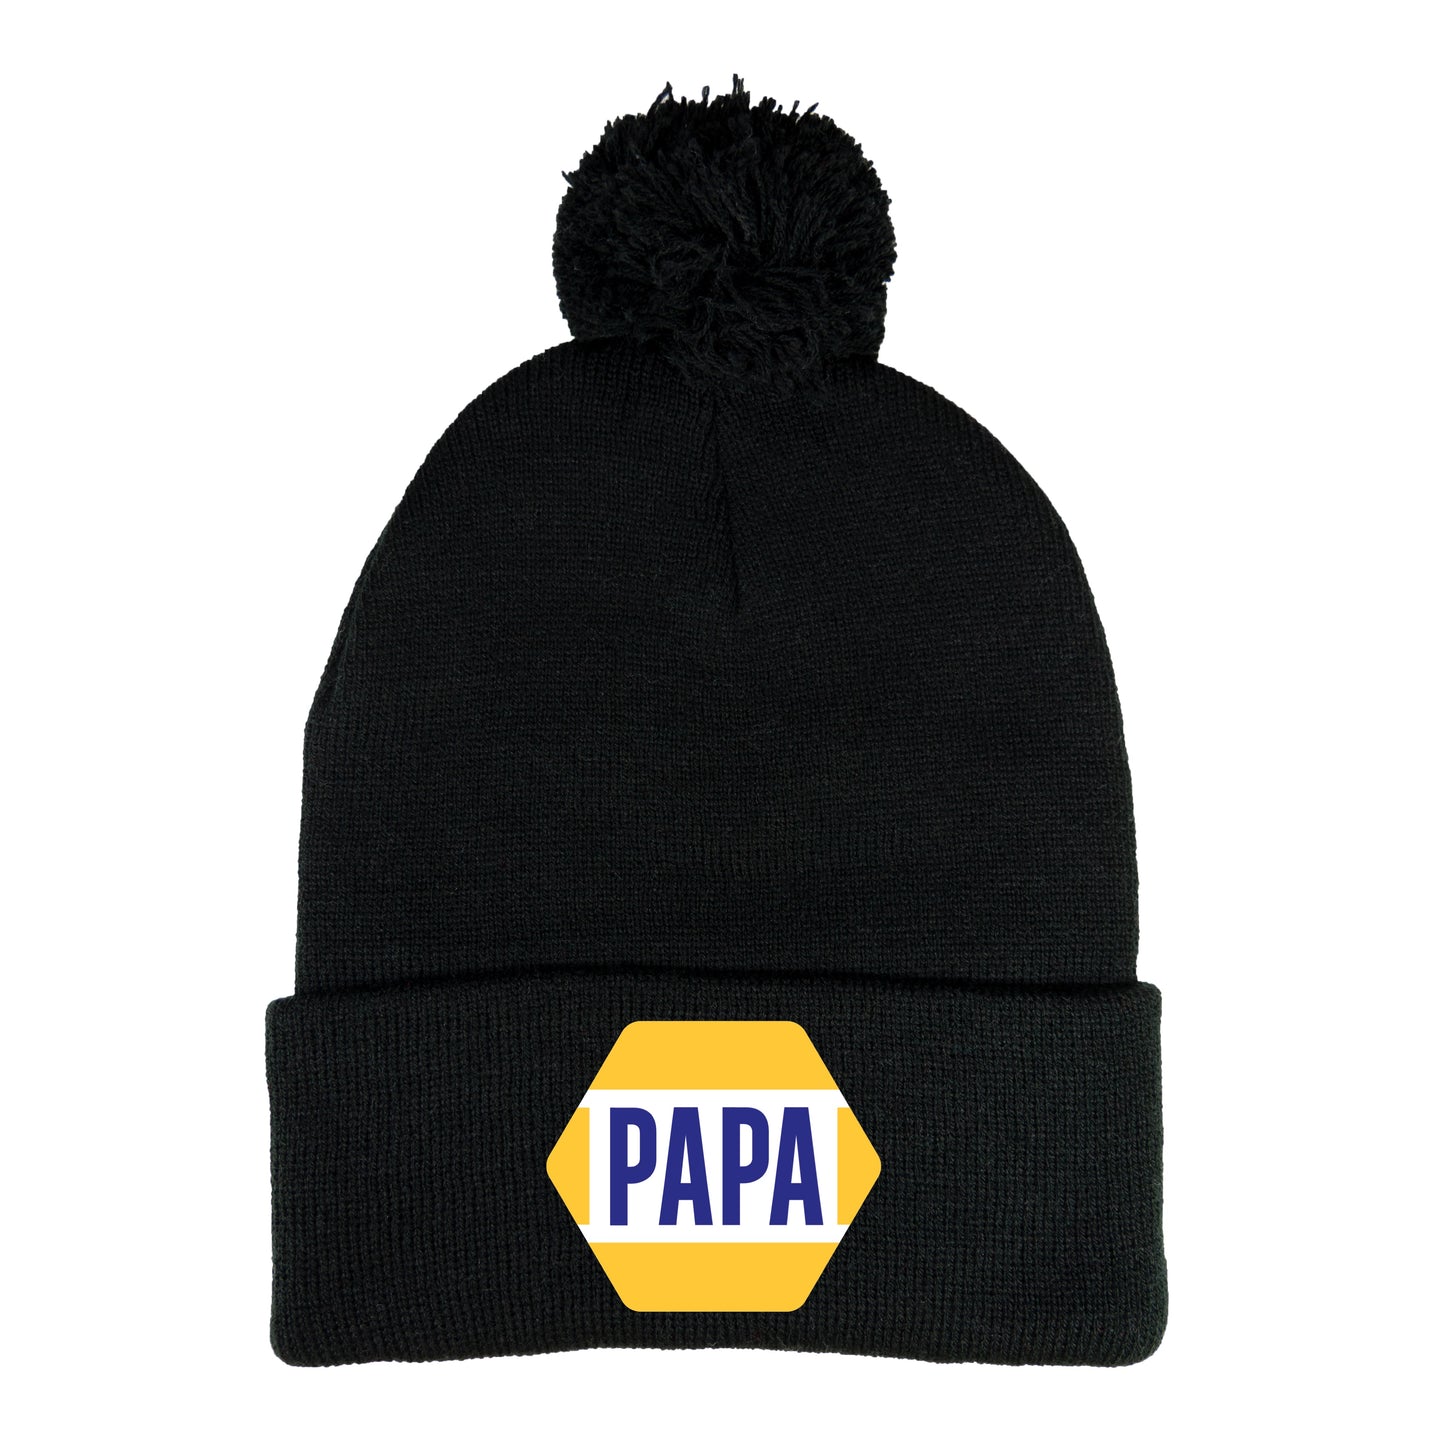 PAPA Know How 3D 12 in Knit Pom-Pom Top Beanie- Black - Ten Gallon Hat Co.